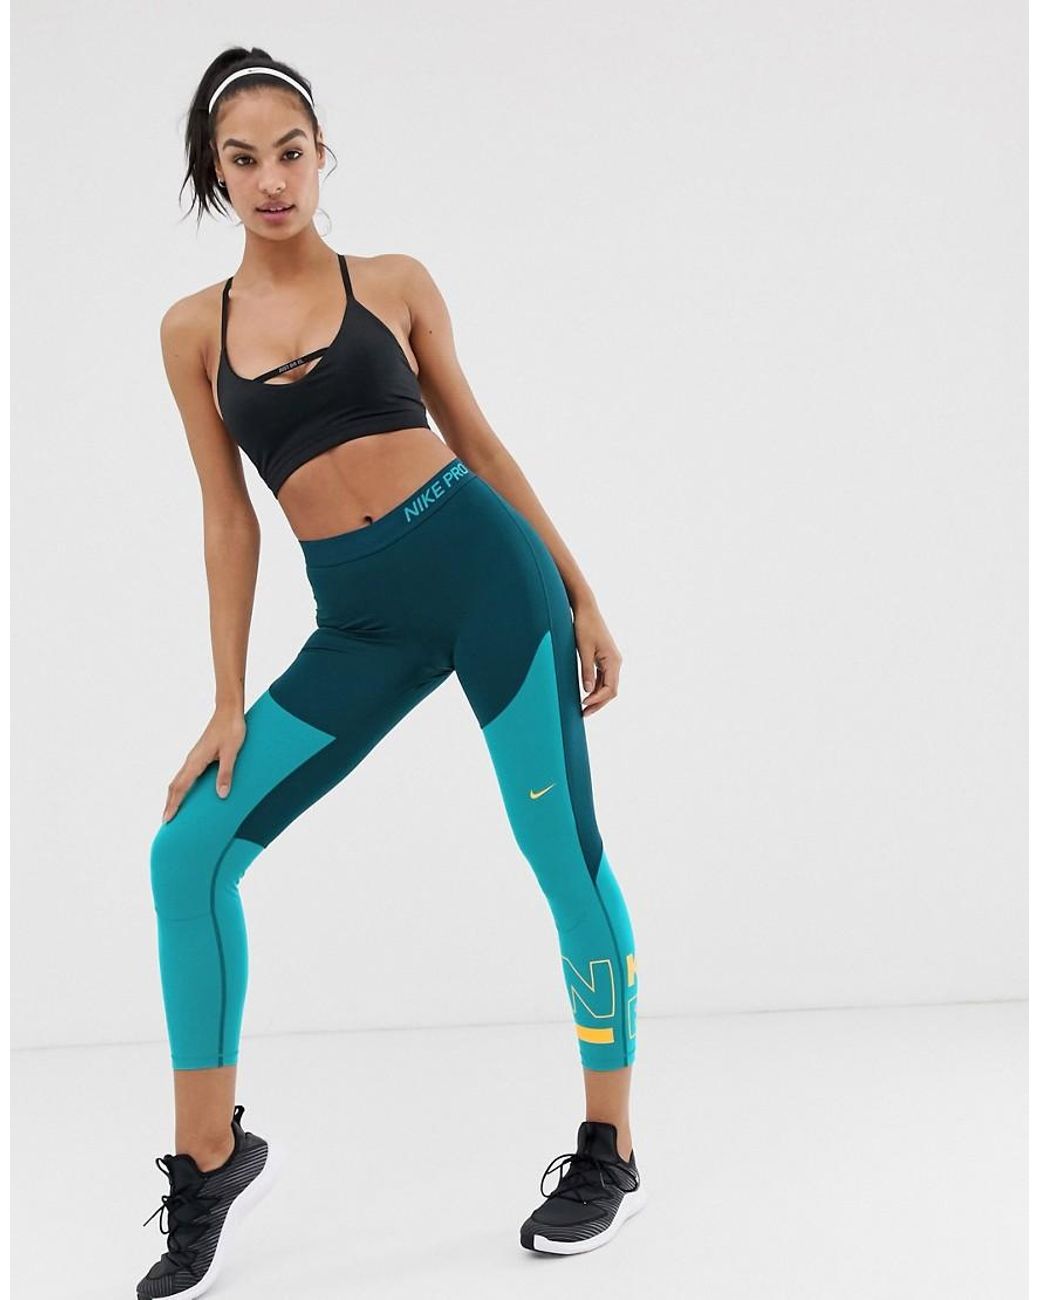 Nike Color Block leggings In Teal And Navy in Blue | Lyst